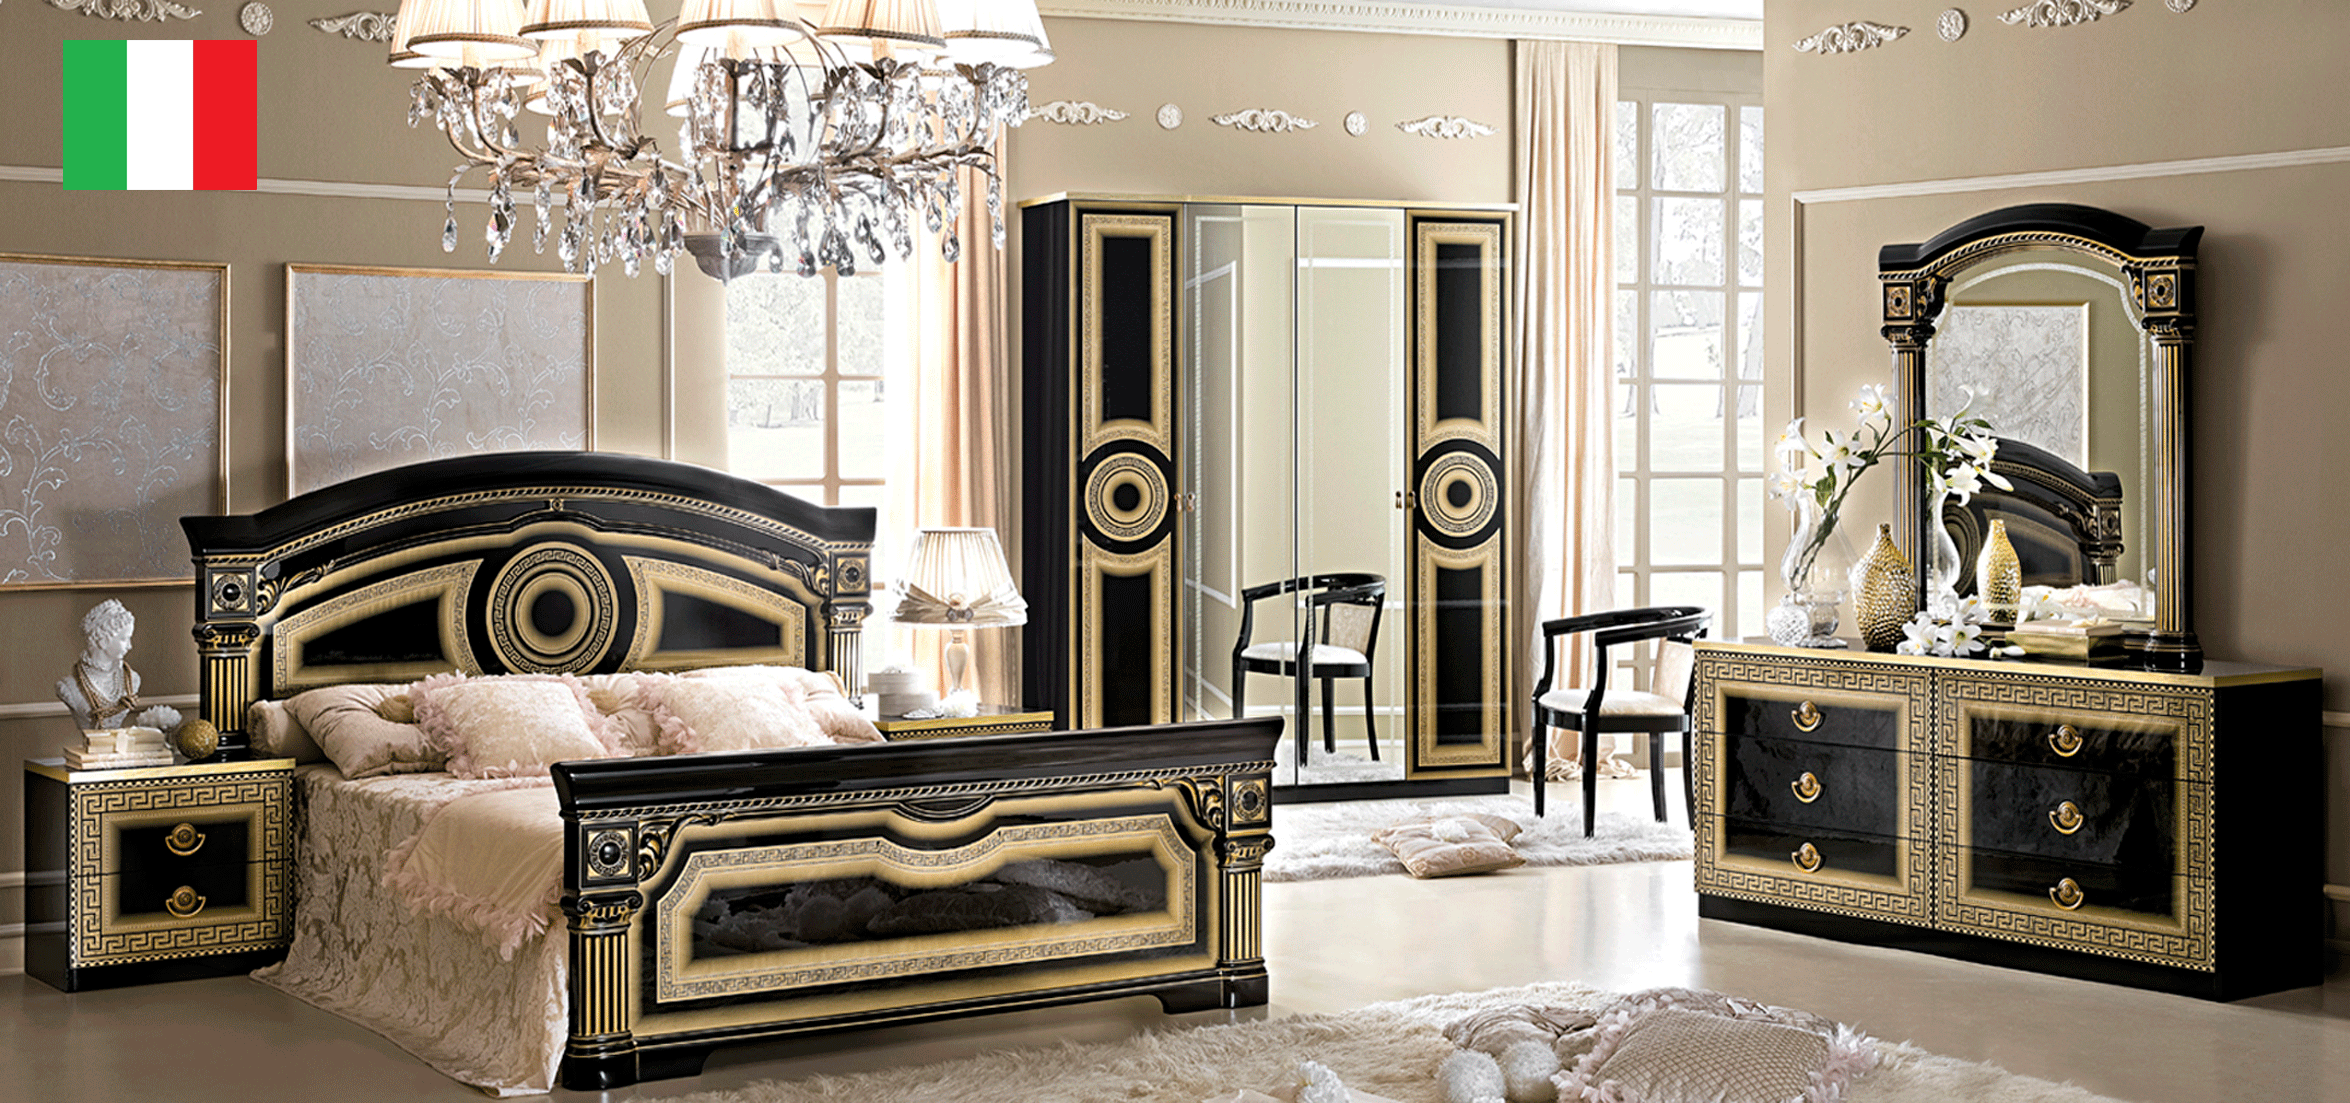 Bedroom Furniture Nightstands Aida Bedroom Black w/Gold, Camelgroup Italy